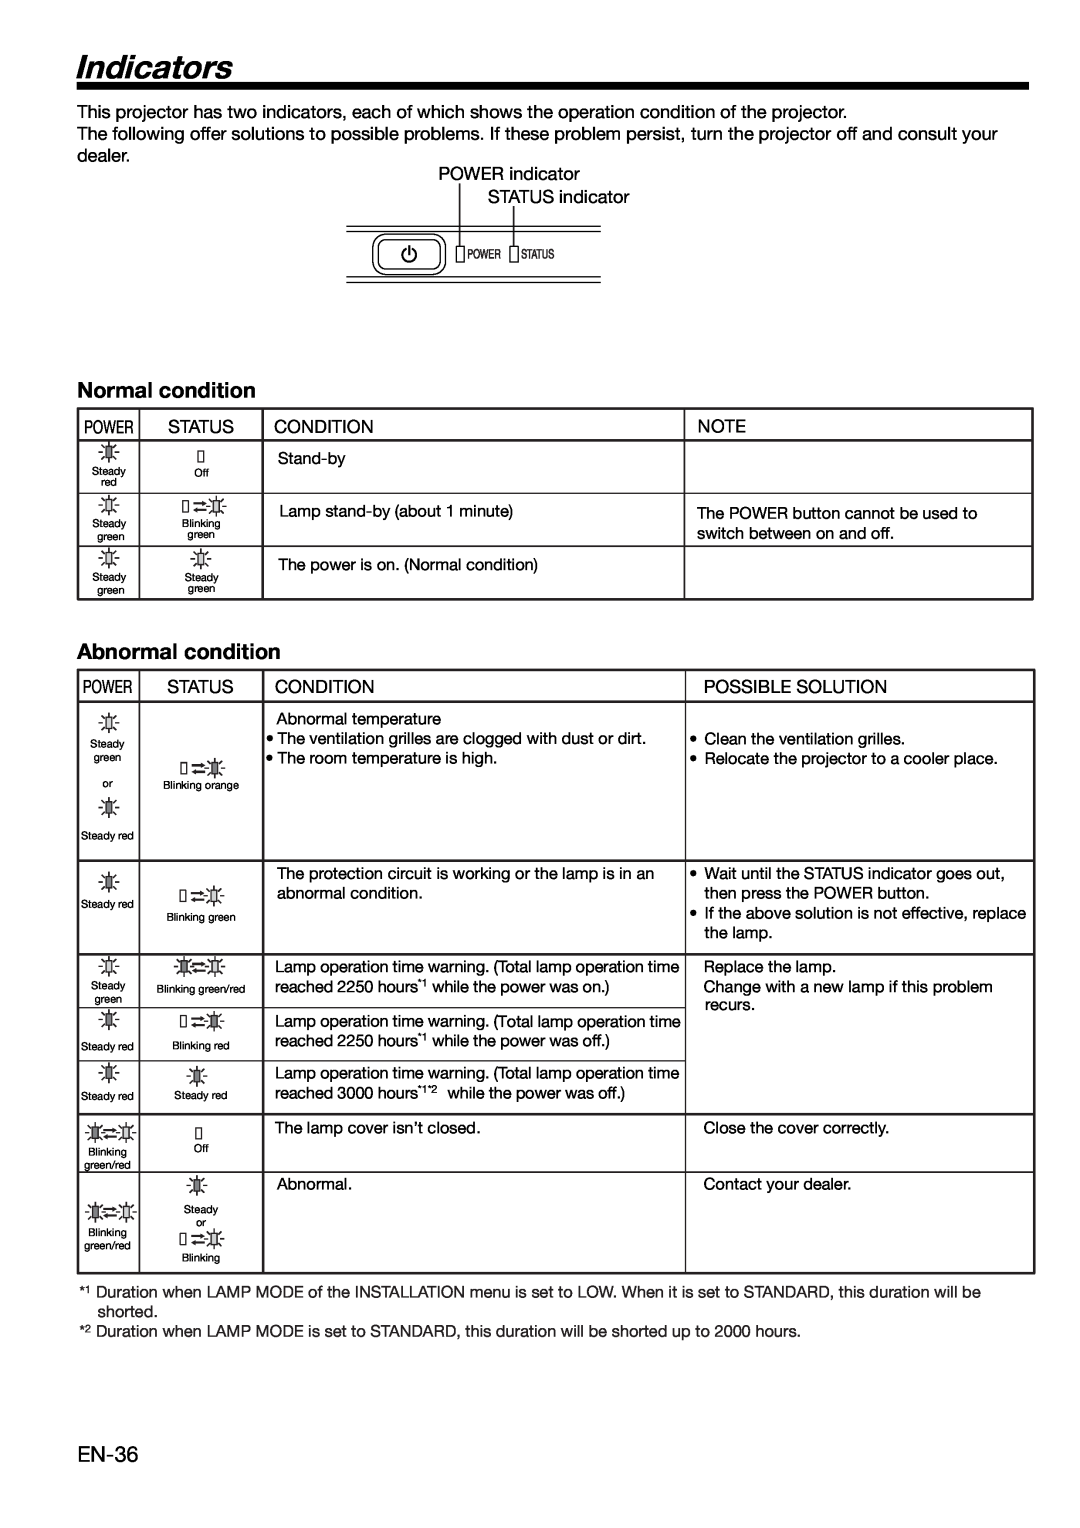 Mitsubishi HC1100 user manual Indicators, Normal condition, Abnormal condition 